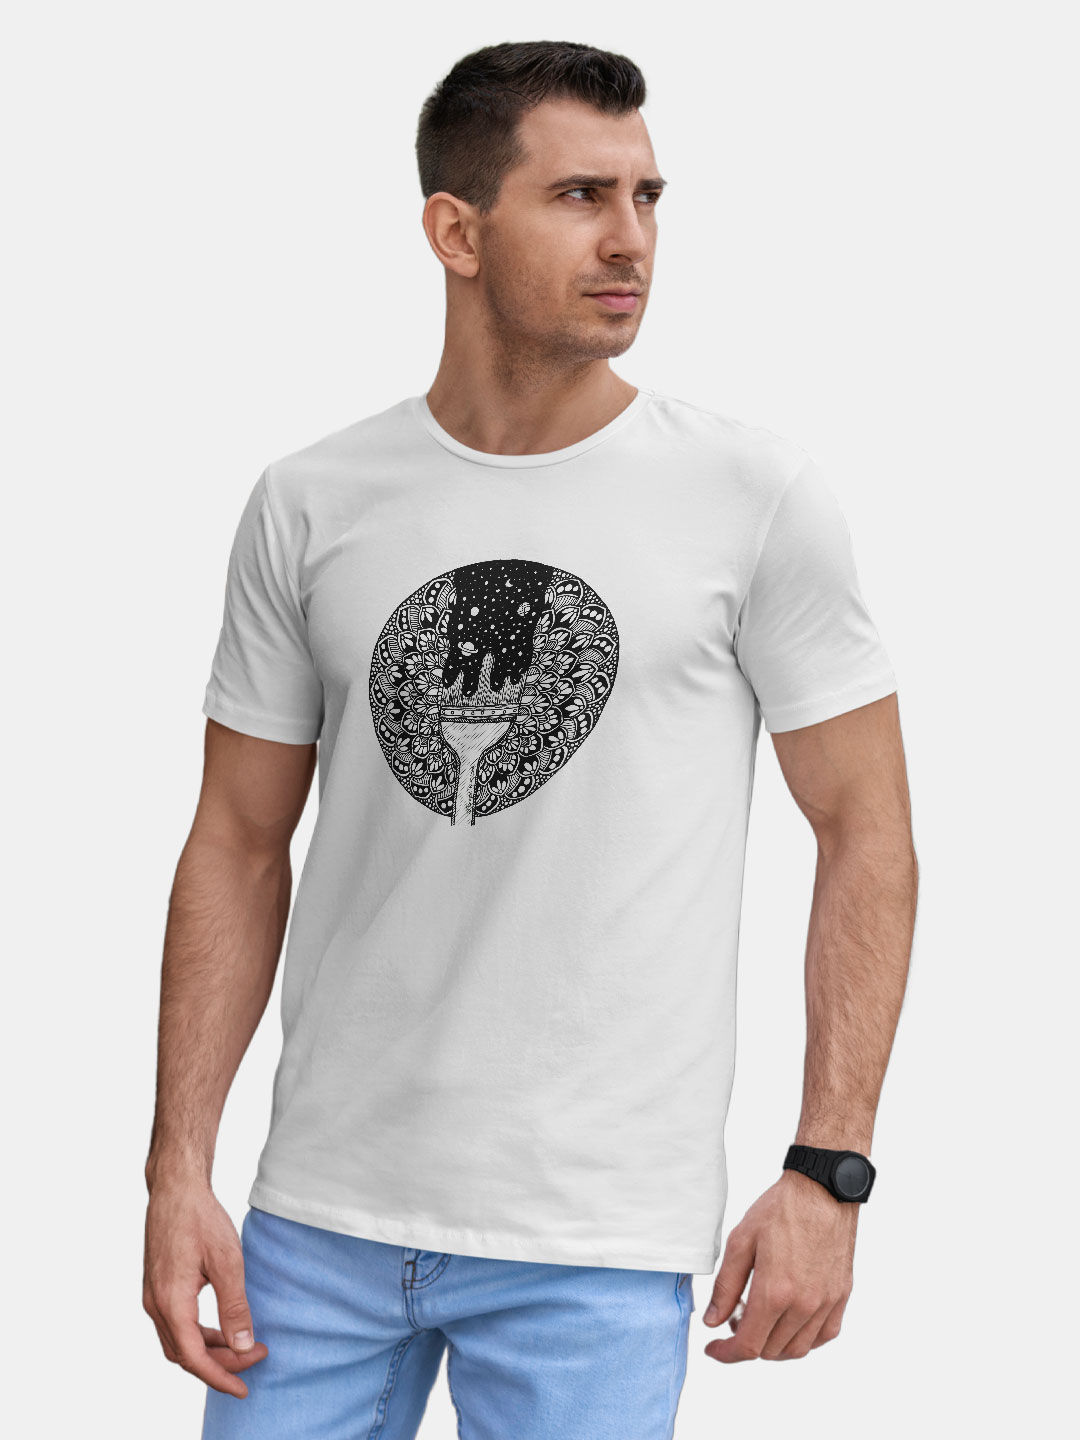 Buy Paintbrush White - Male Designer T-Shirts T-Shirts Online